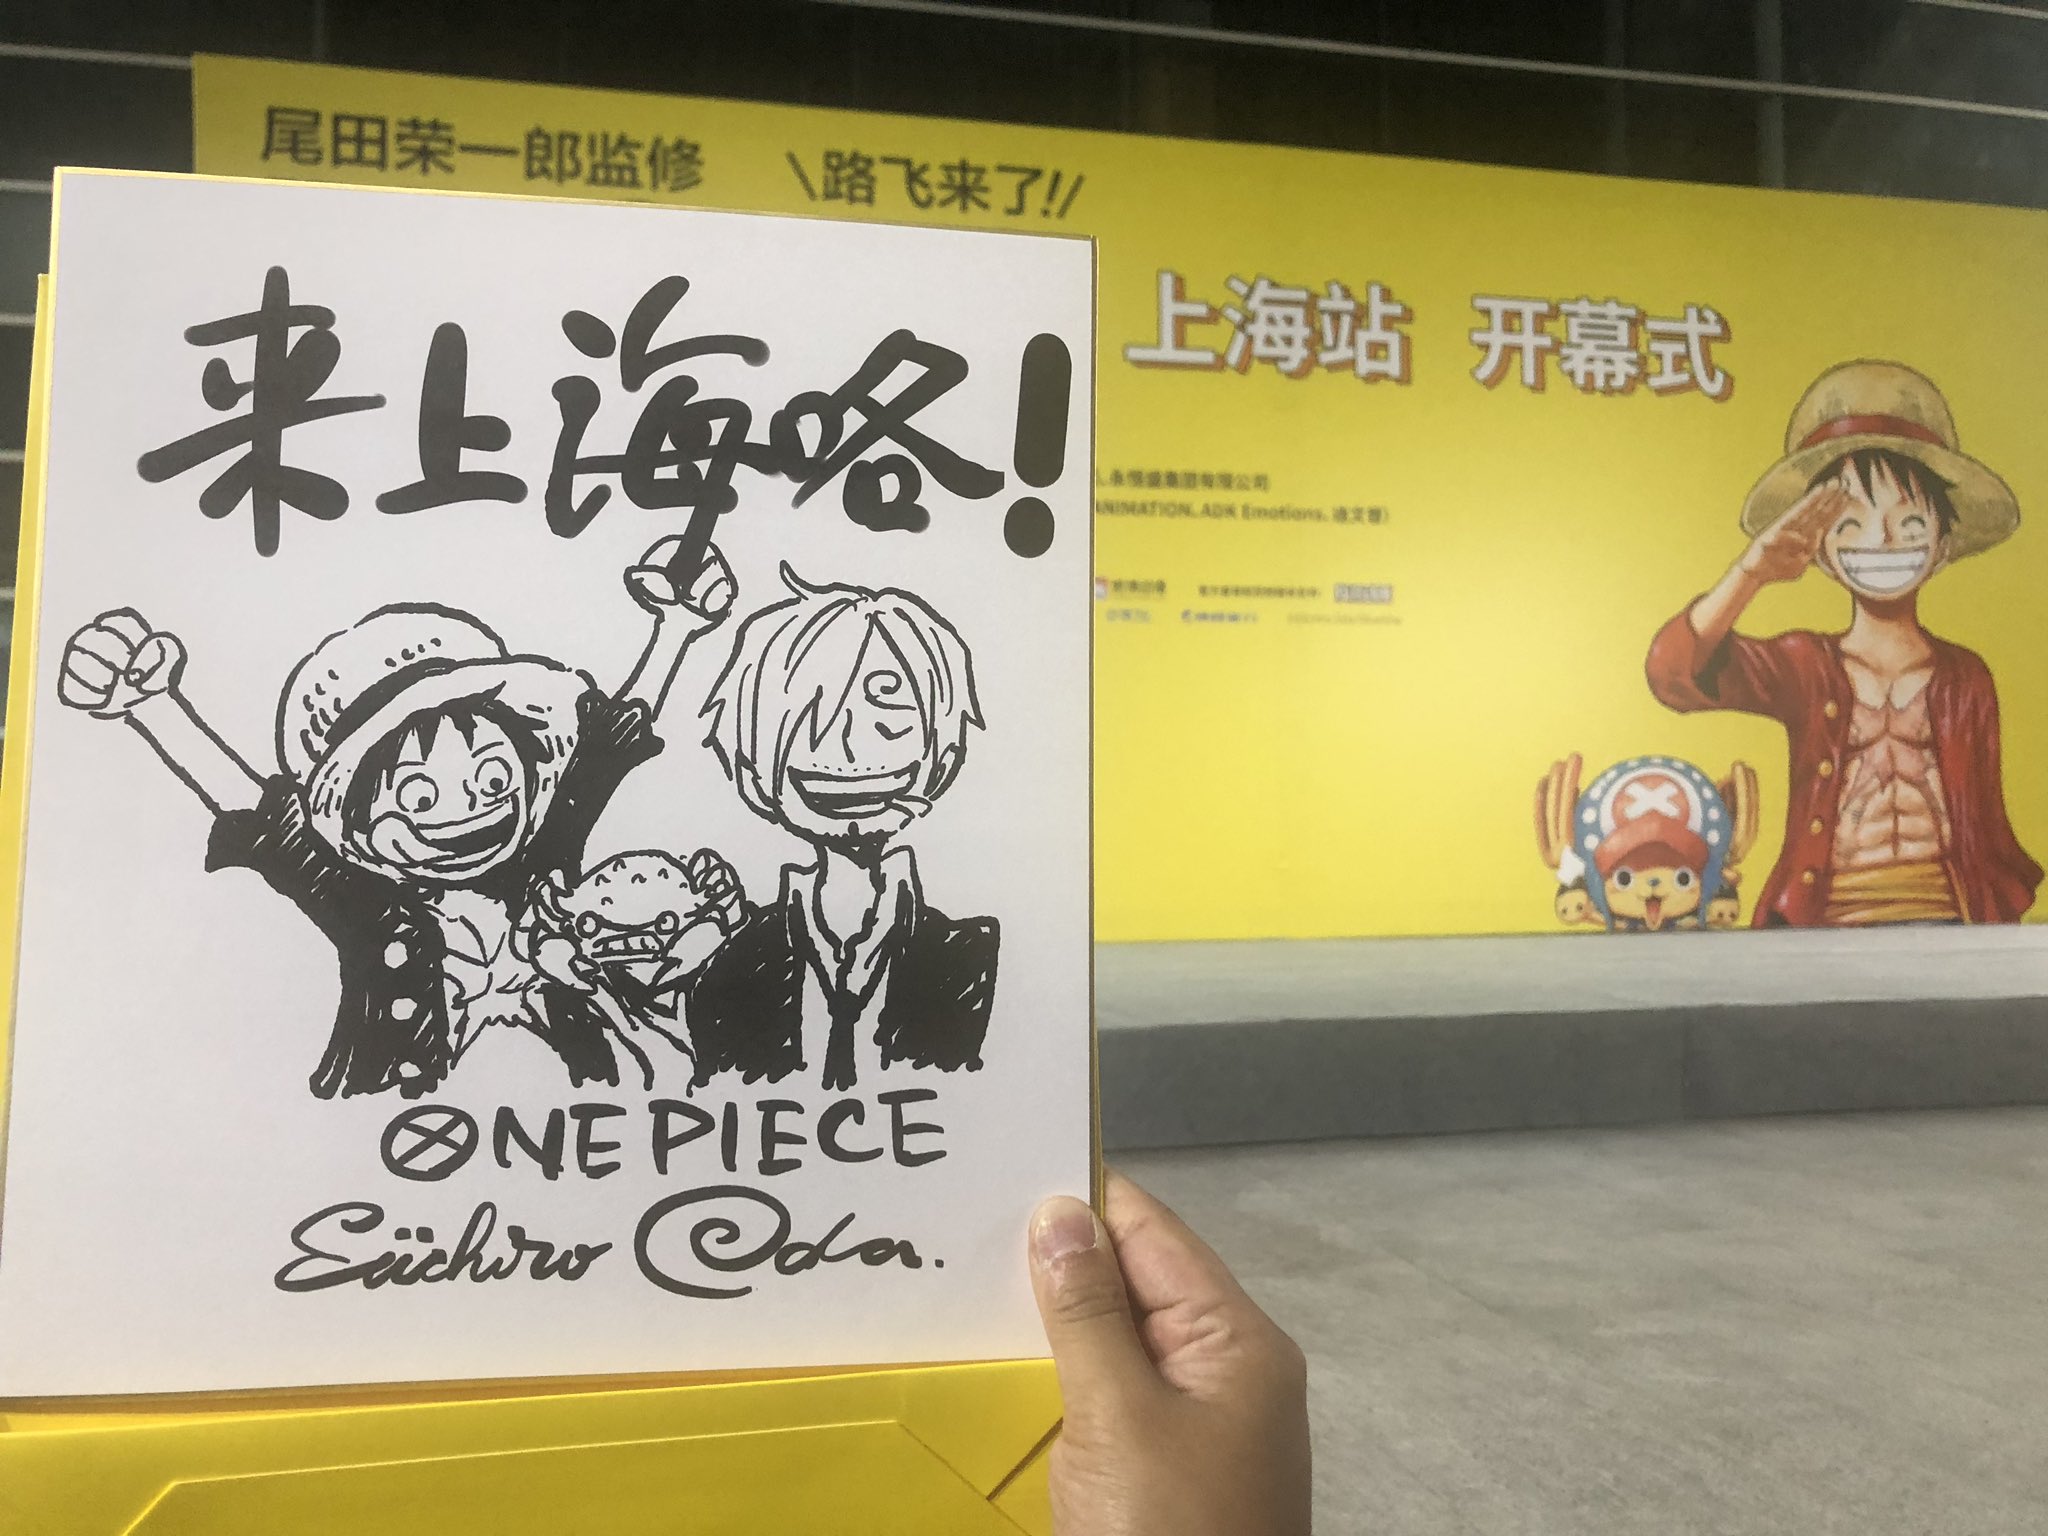 One Piece スタッフ 公式 Official 上海hello One Piece展にイラスト色紙が贈呈されました 上海蟹たべたい なルフィ サンジ T Co Tfvygoucok Twitter